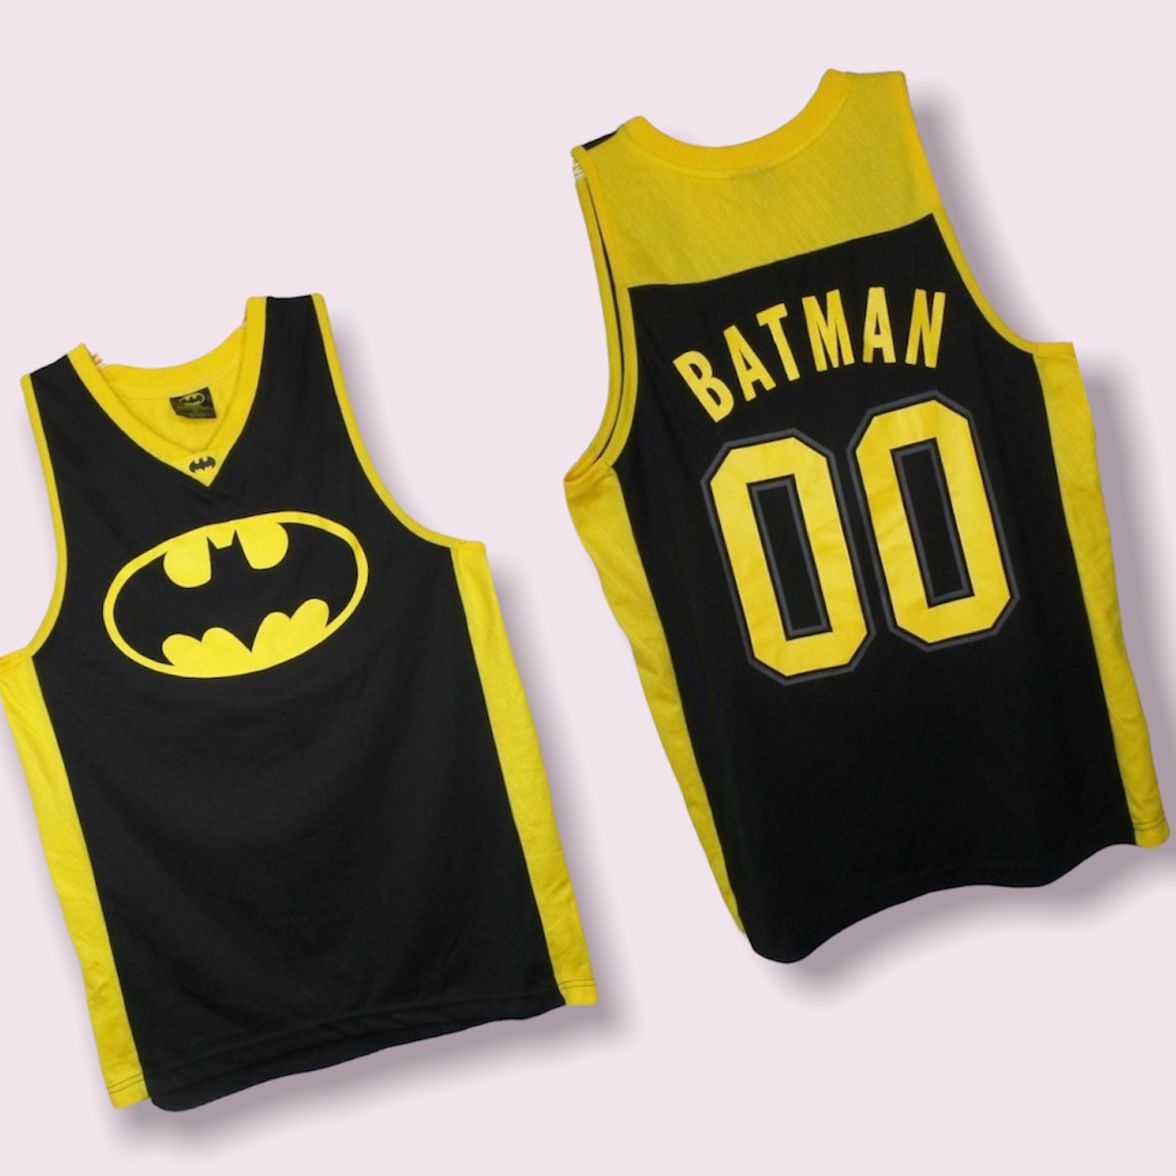 Batman 00 Jersey